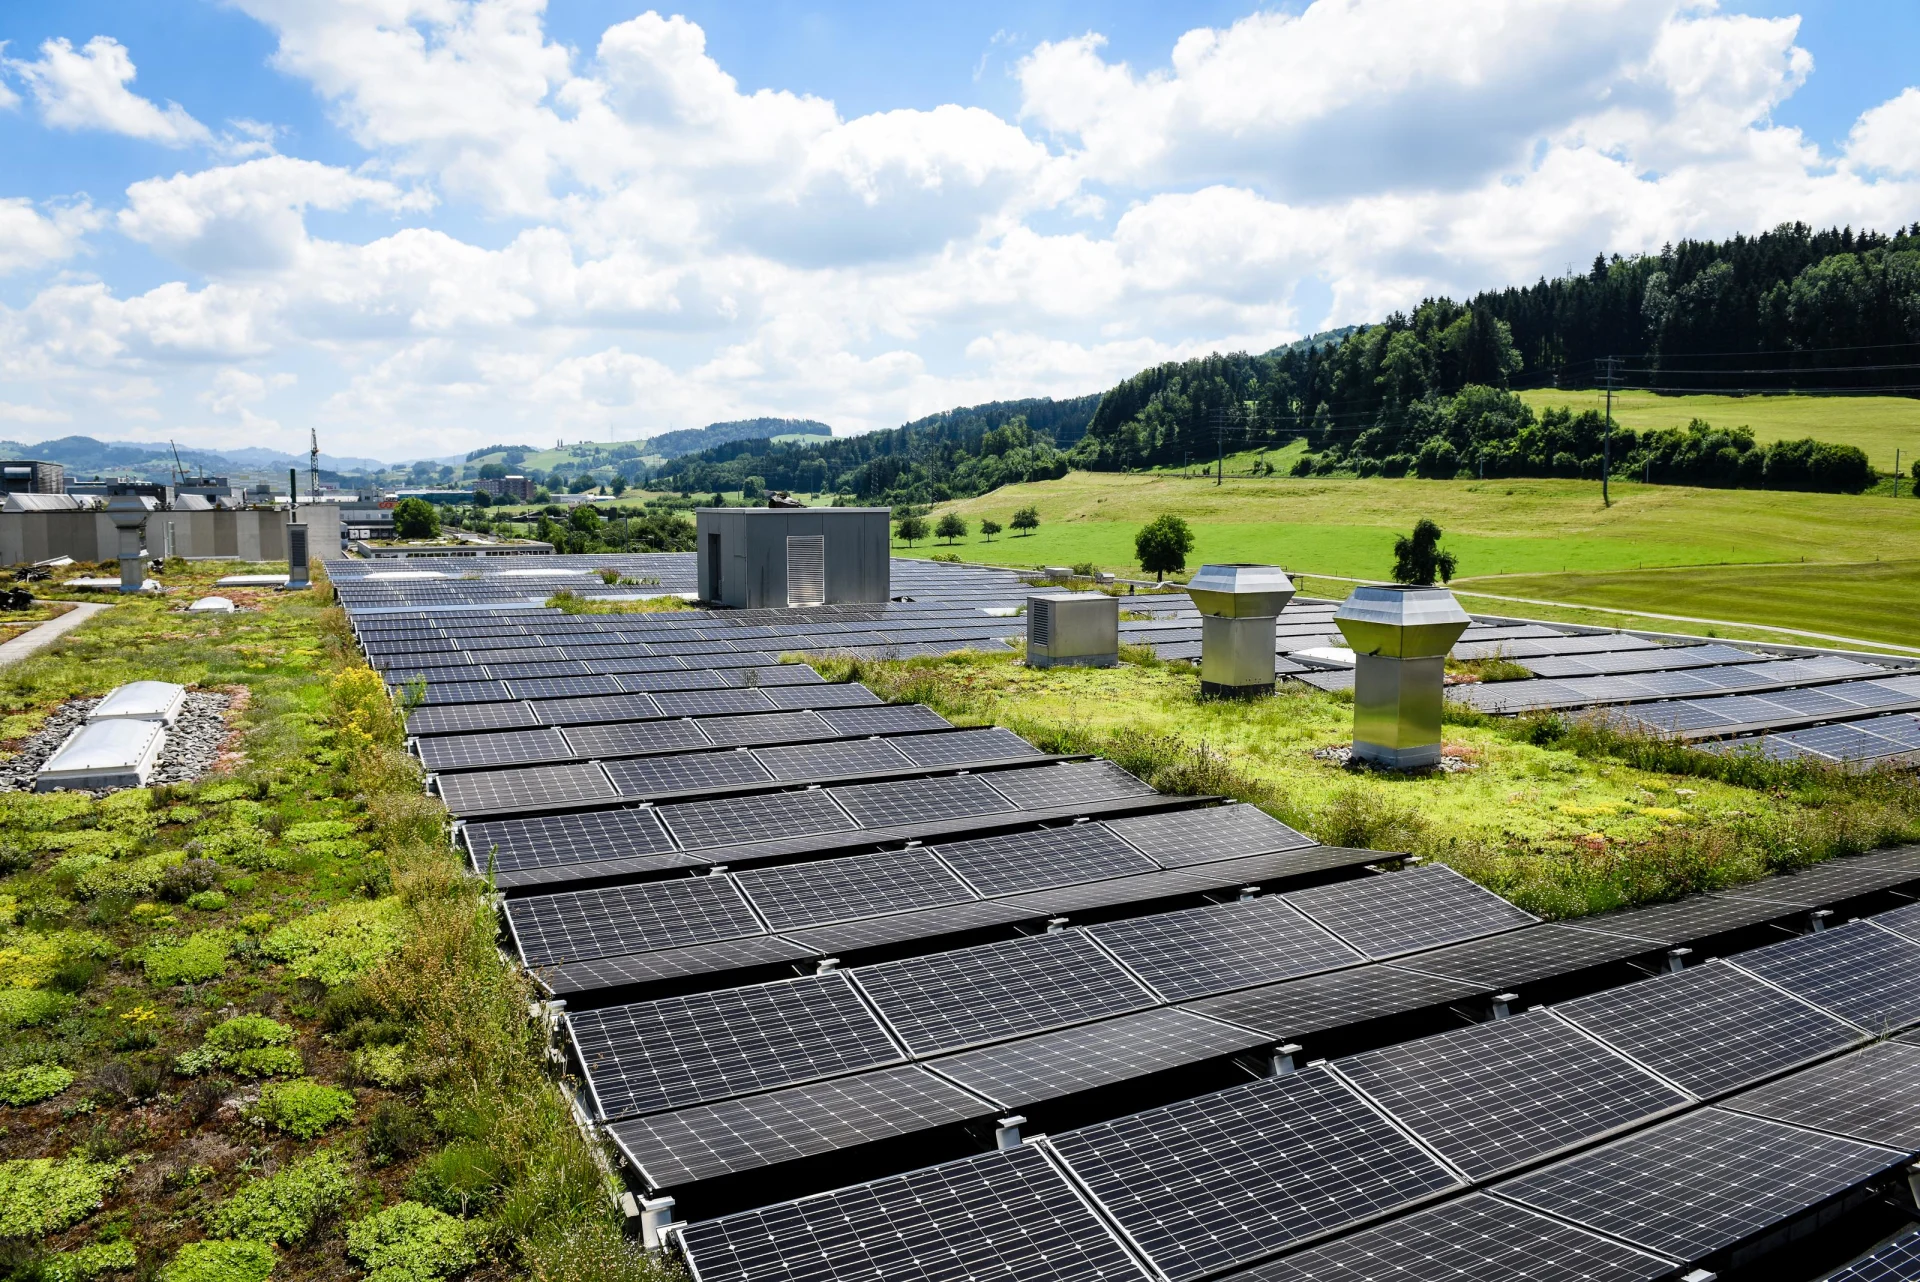 Solar panels on a green flat roof